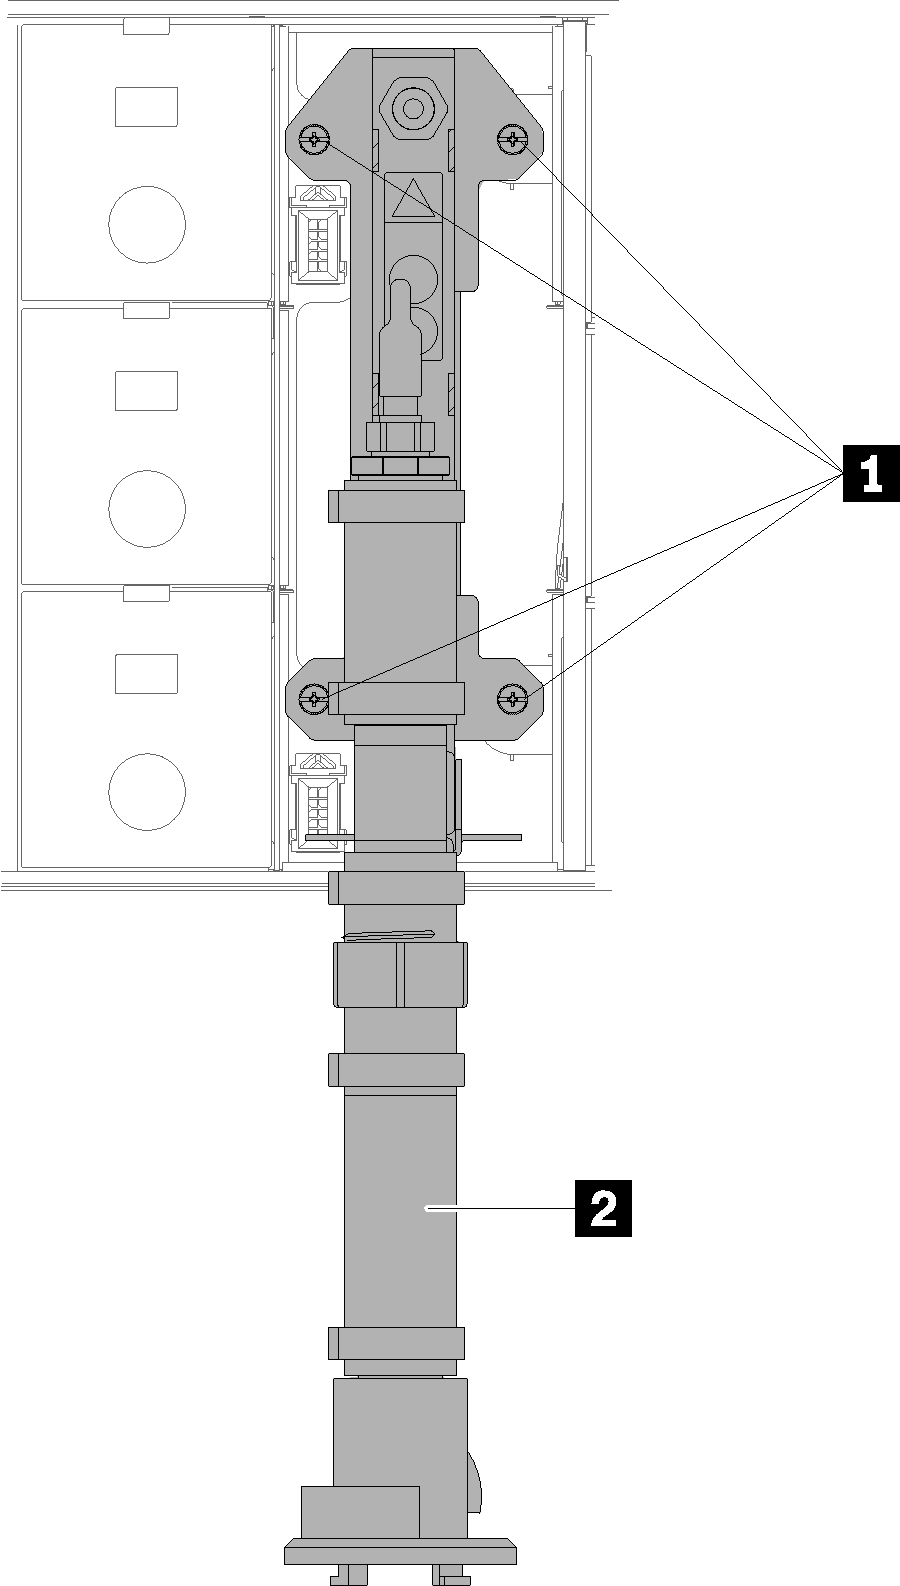 Manifold screw locations